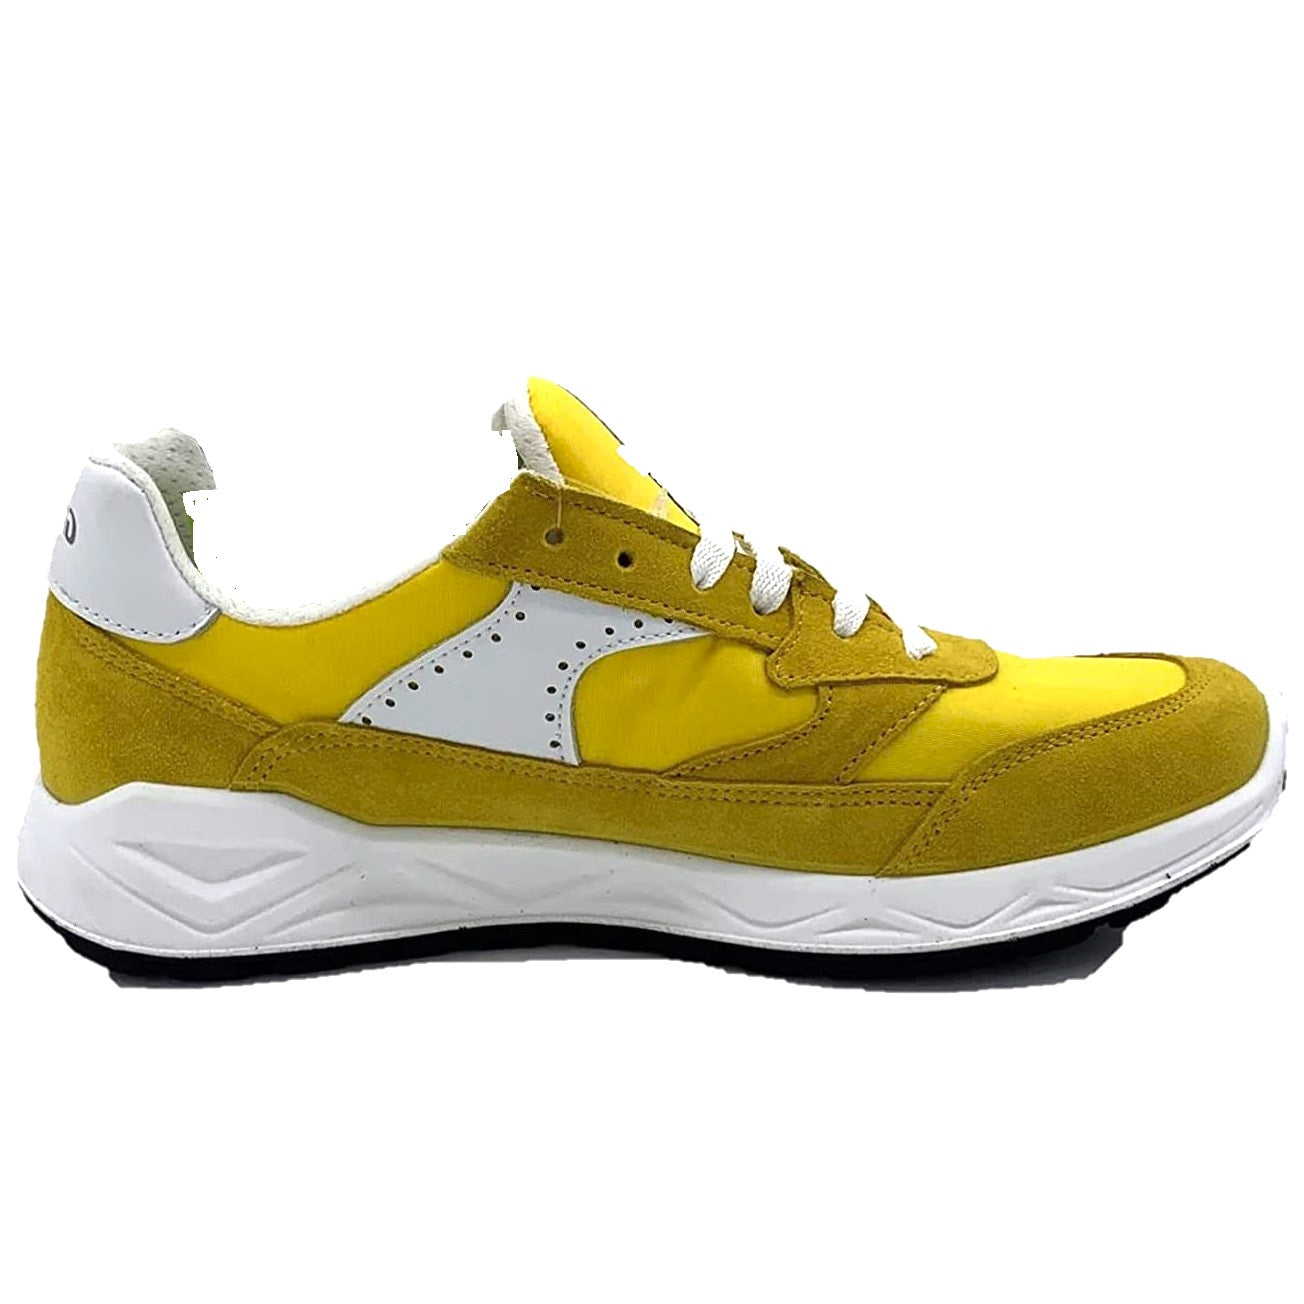 Scarpe uomo GRISPORT art. 44201V11 sneakers giallo casual – Supernova  calzature